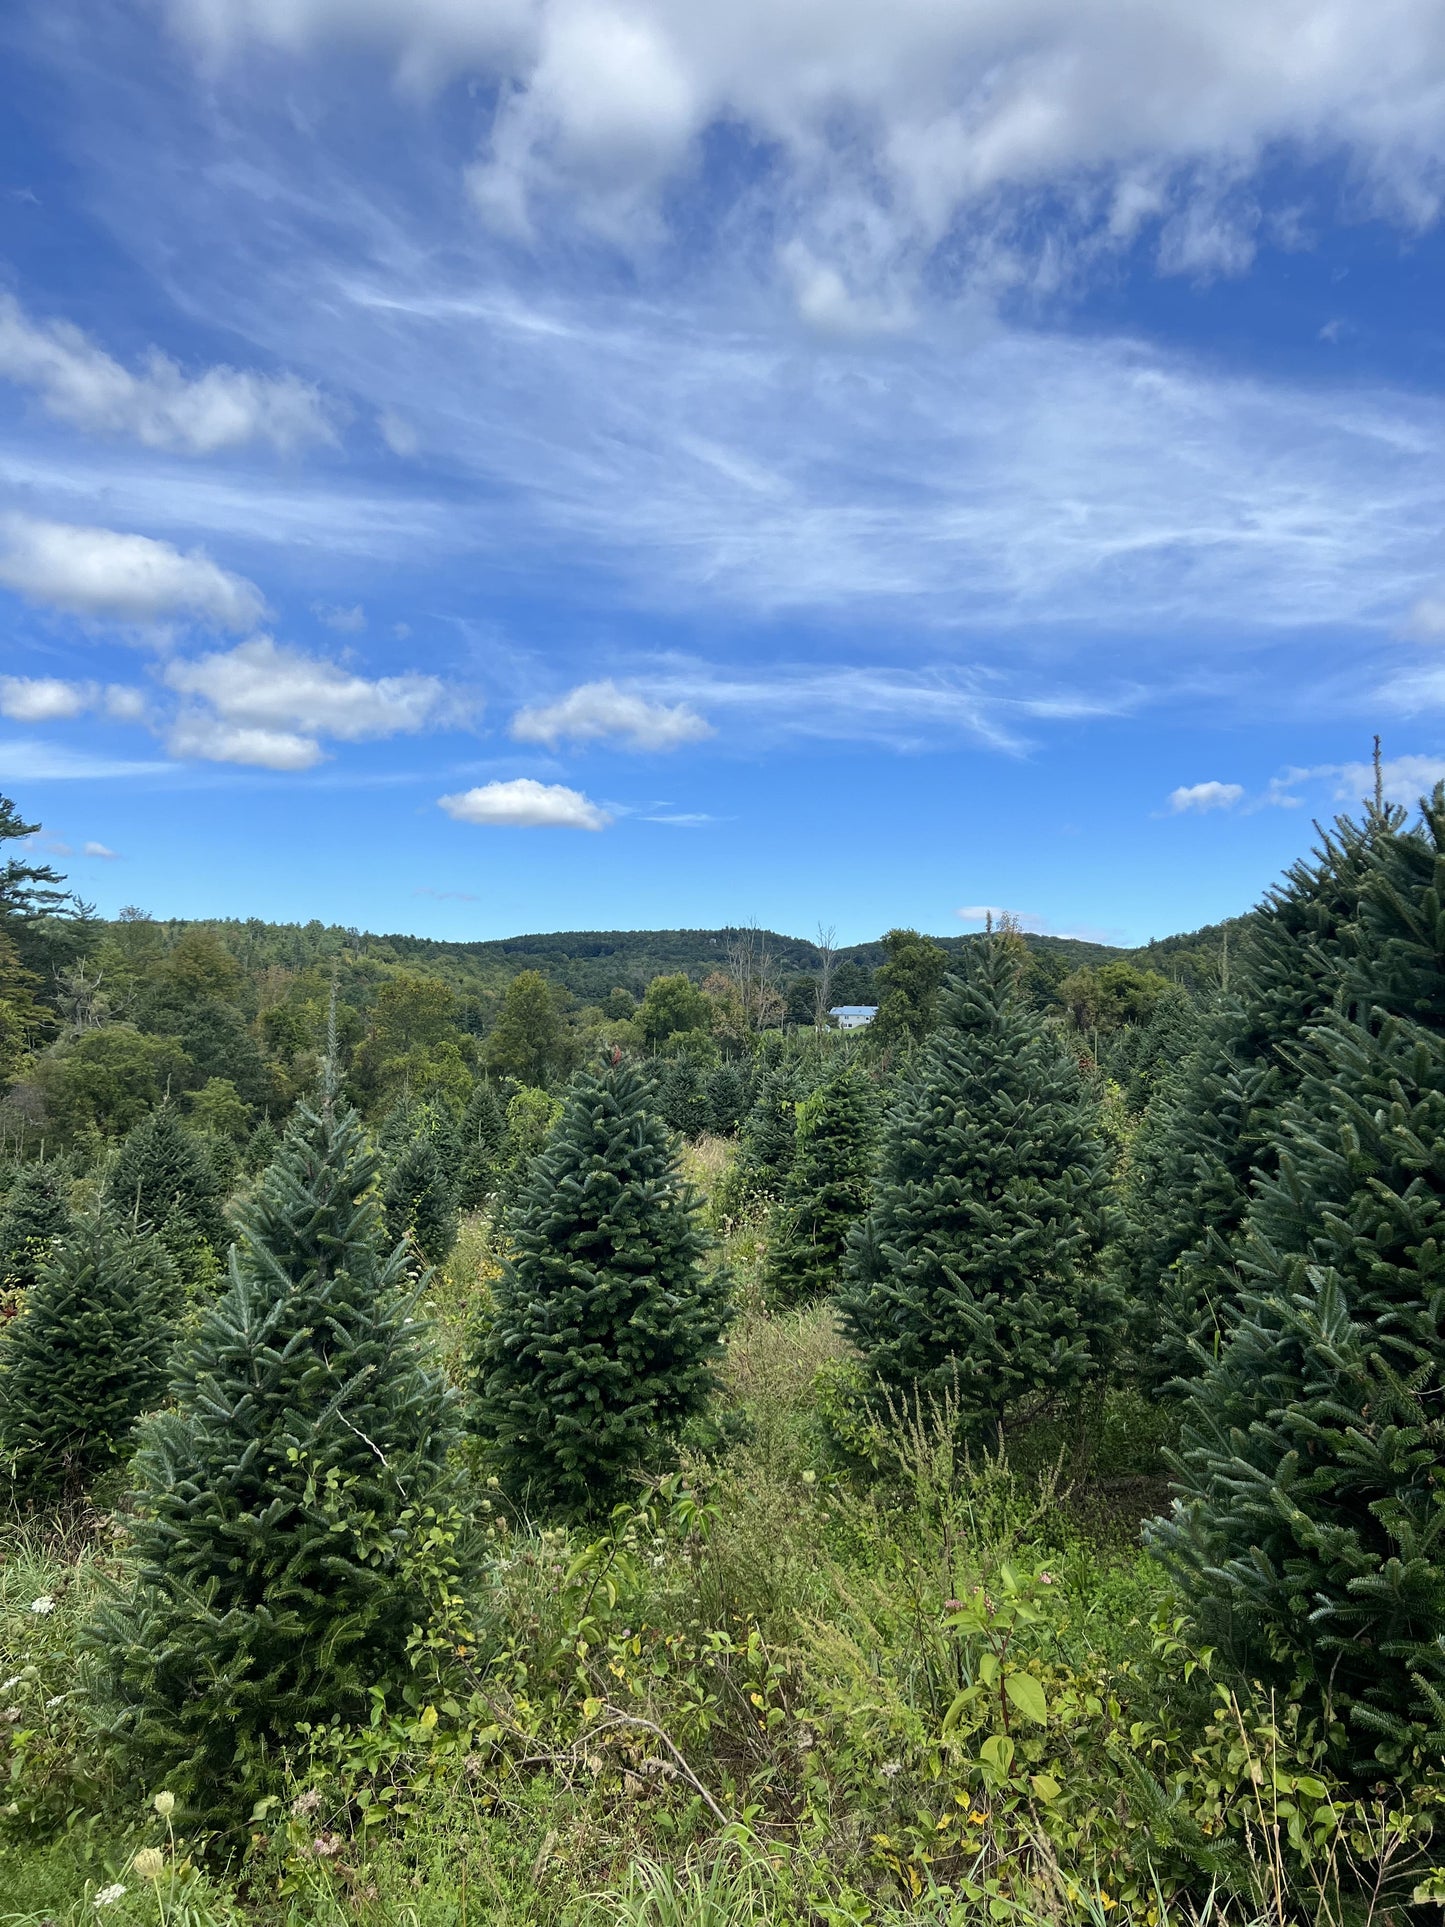 Real Christmas Trees Delivered 6 Foot Premium Fraser Fir